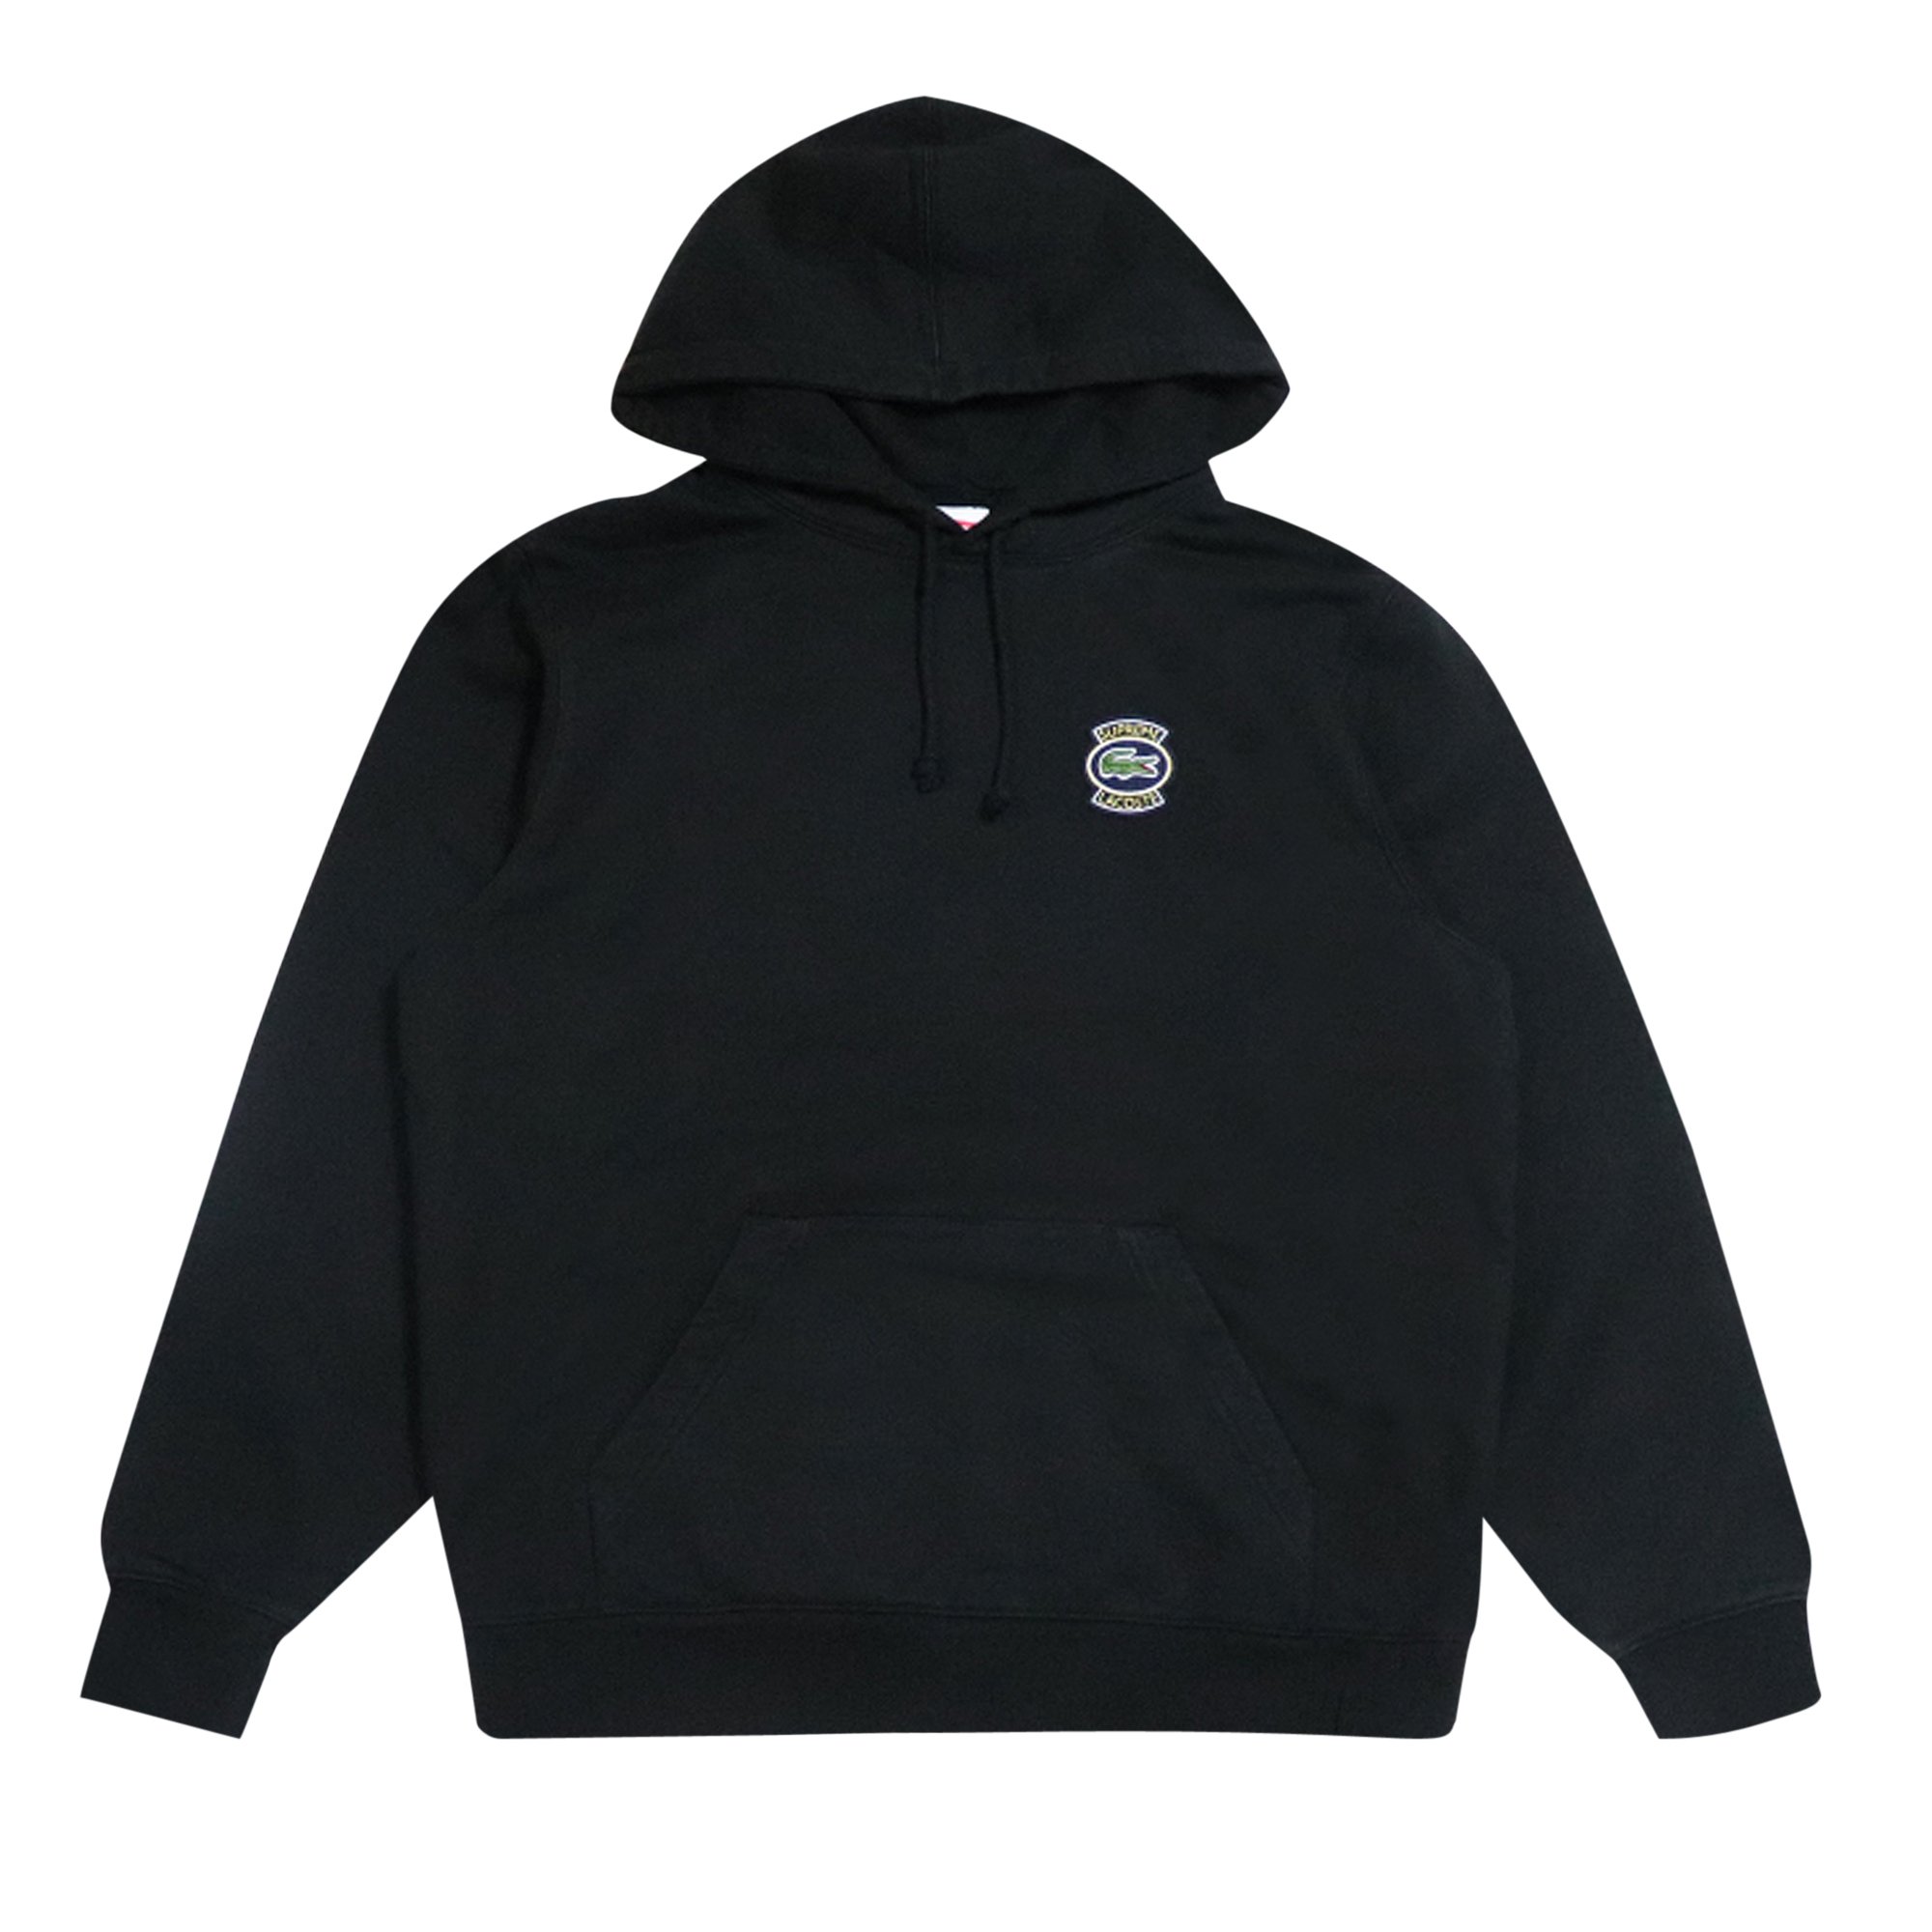 Supreme x Lacoste Hooded Sweatshirt 'Black'